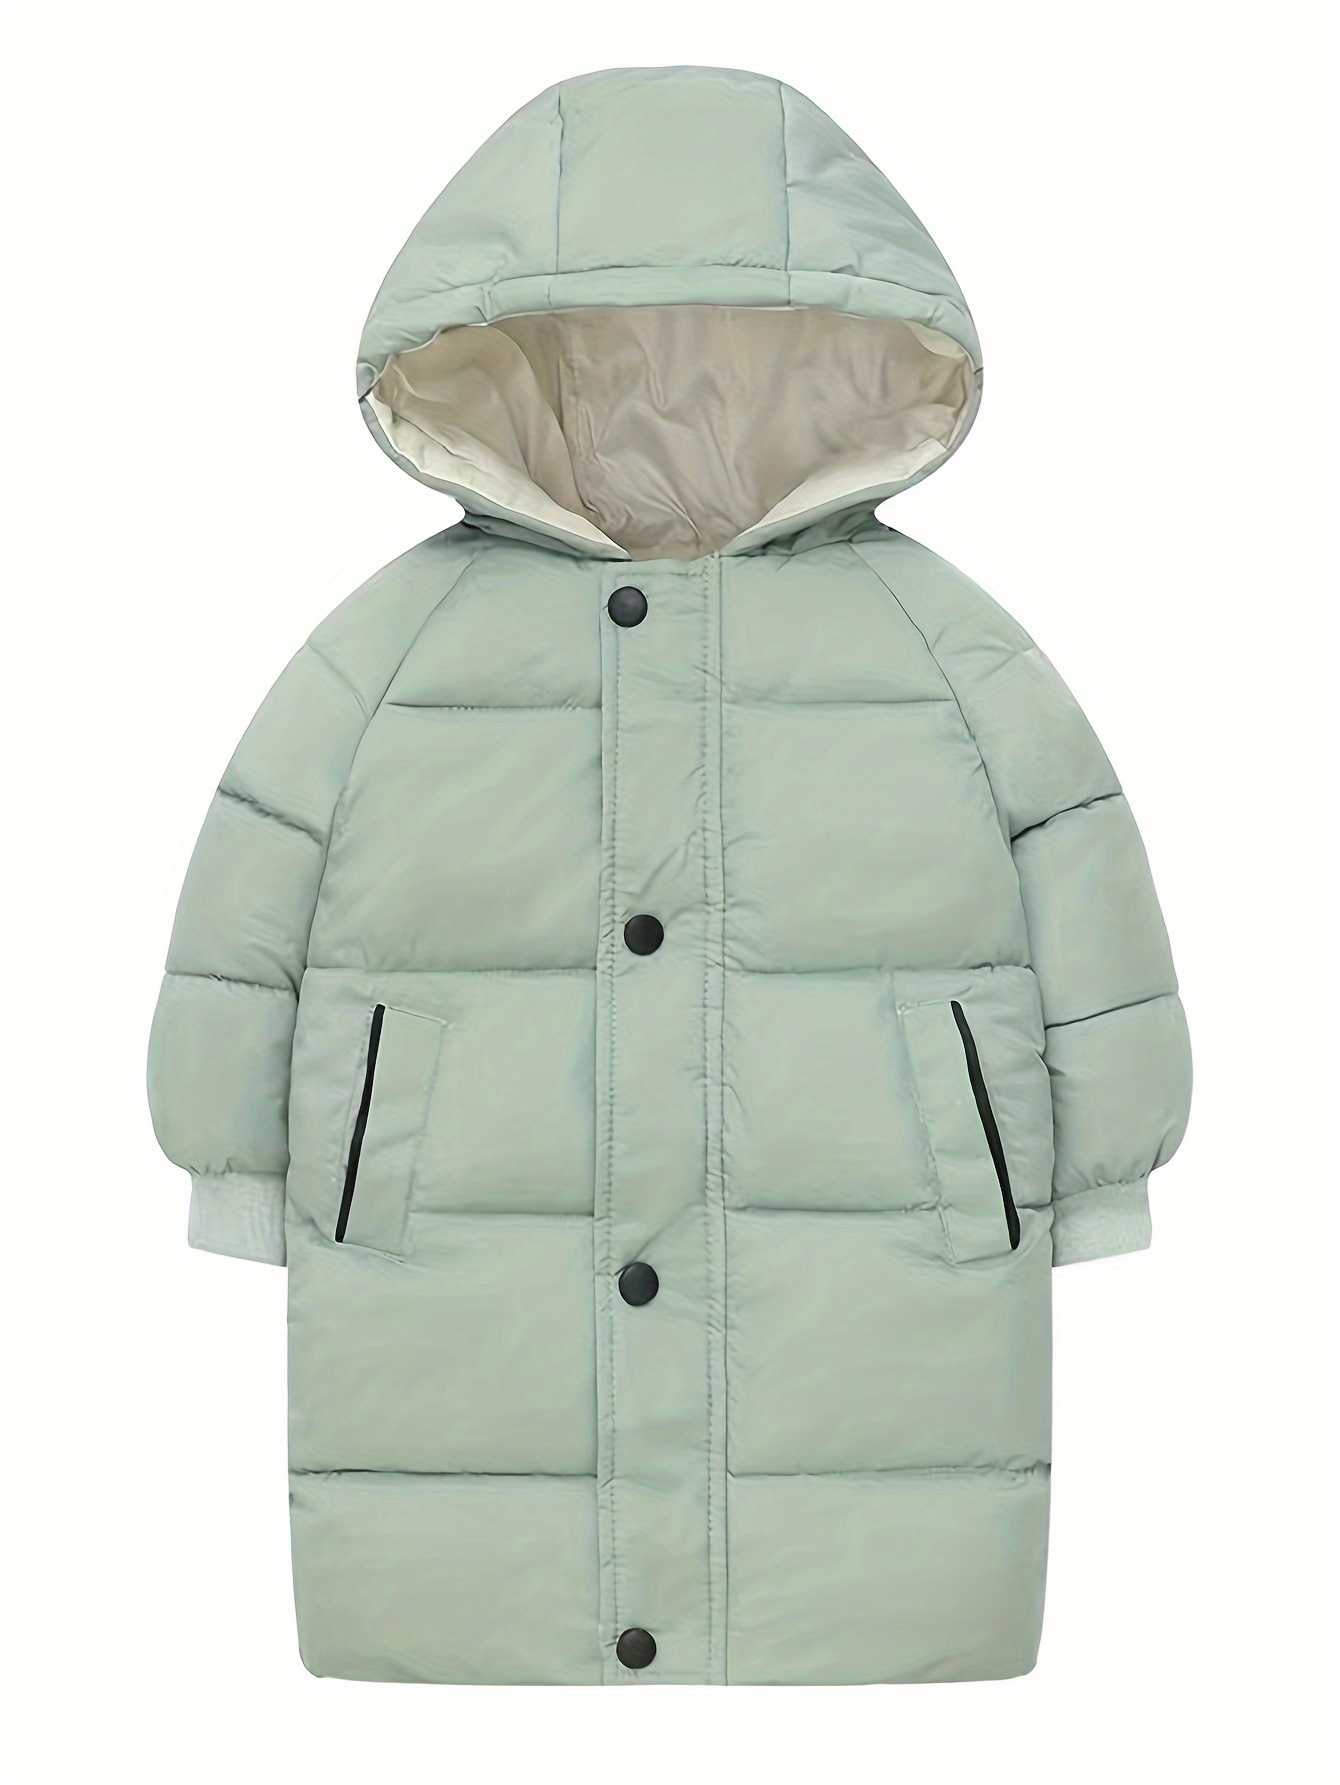 Children's Coat Fashion Fur Hooded Parkas Boys Warm Lined Outwear